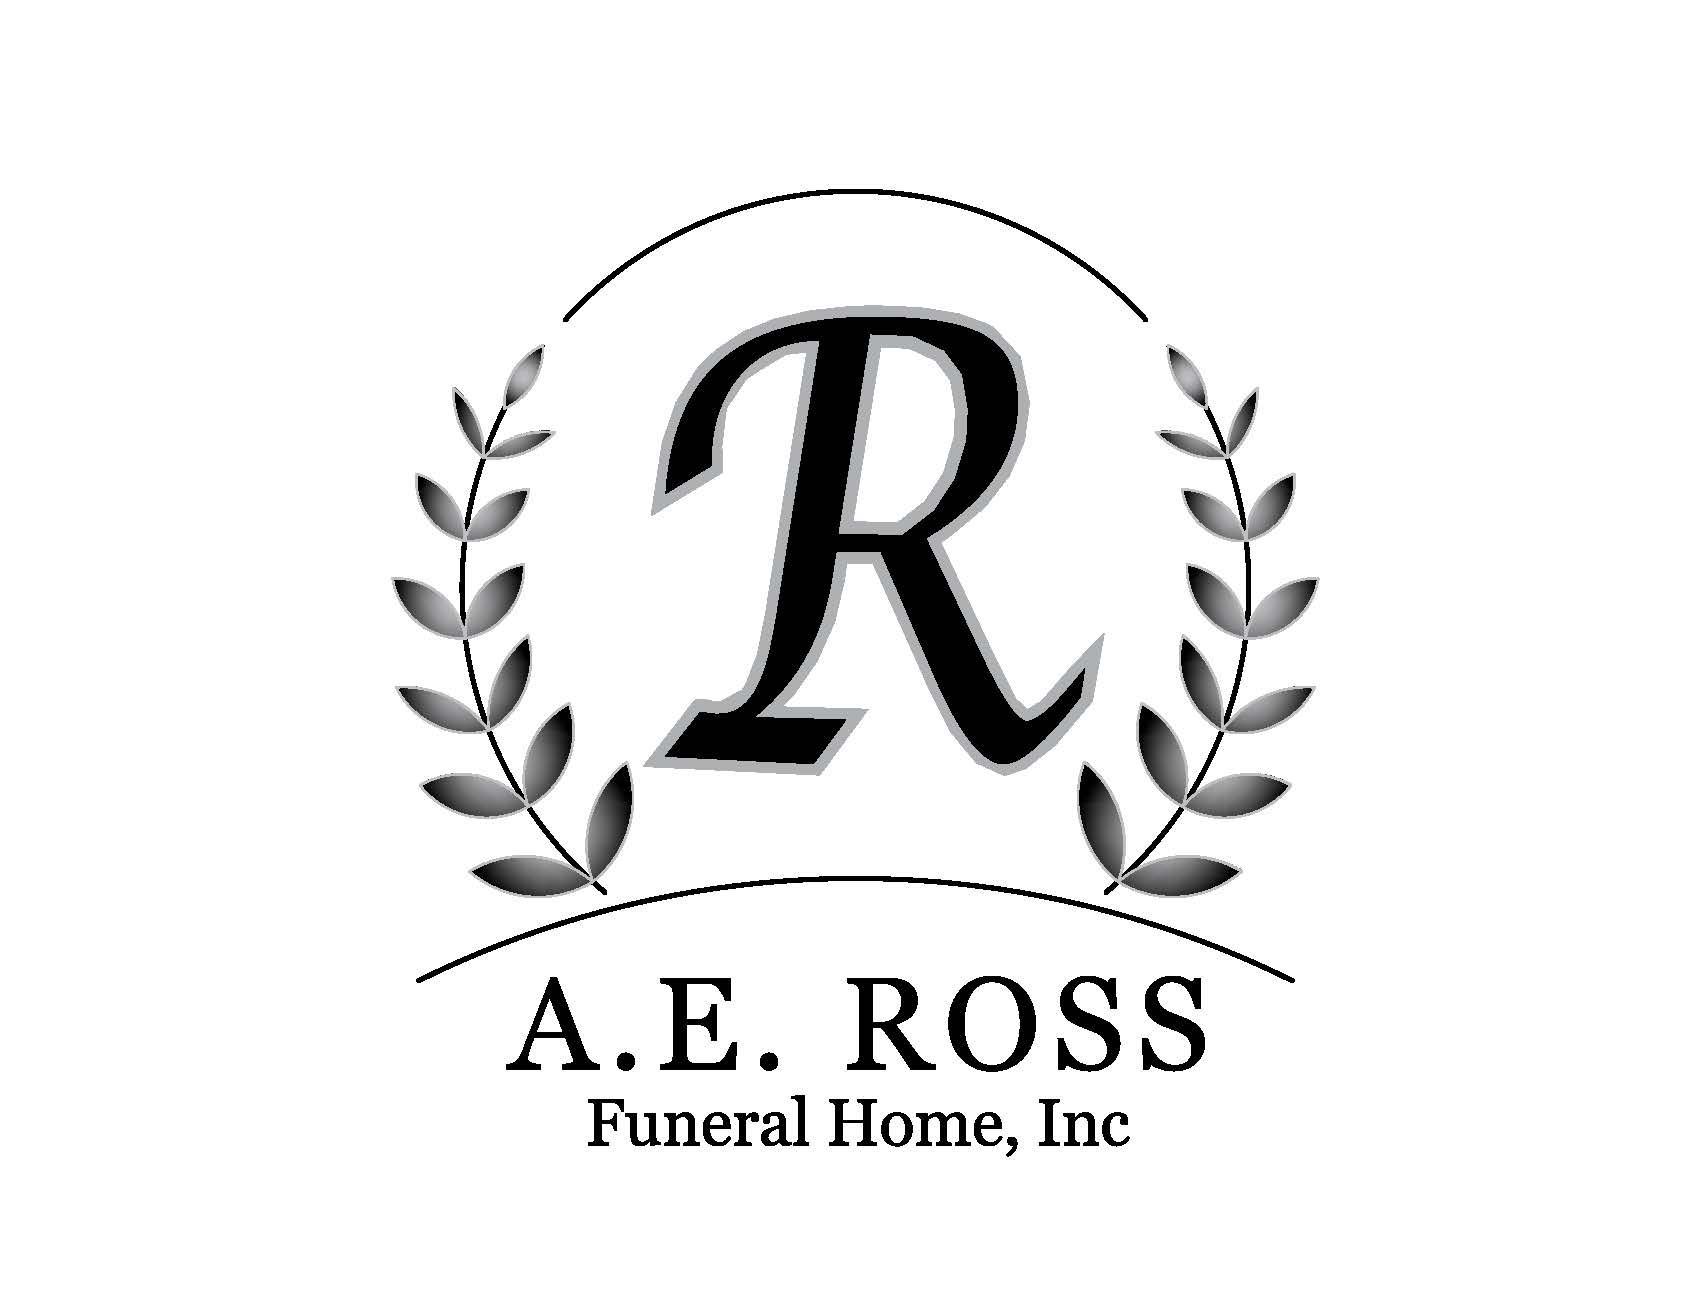 A.E. Ross Funeral Home